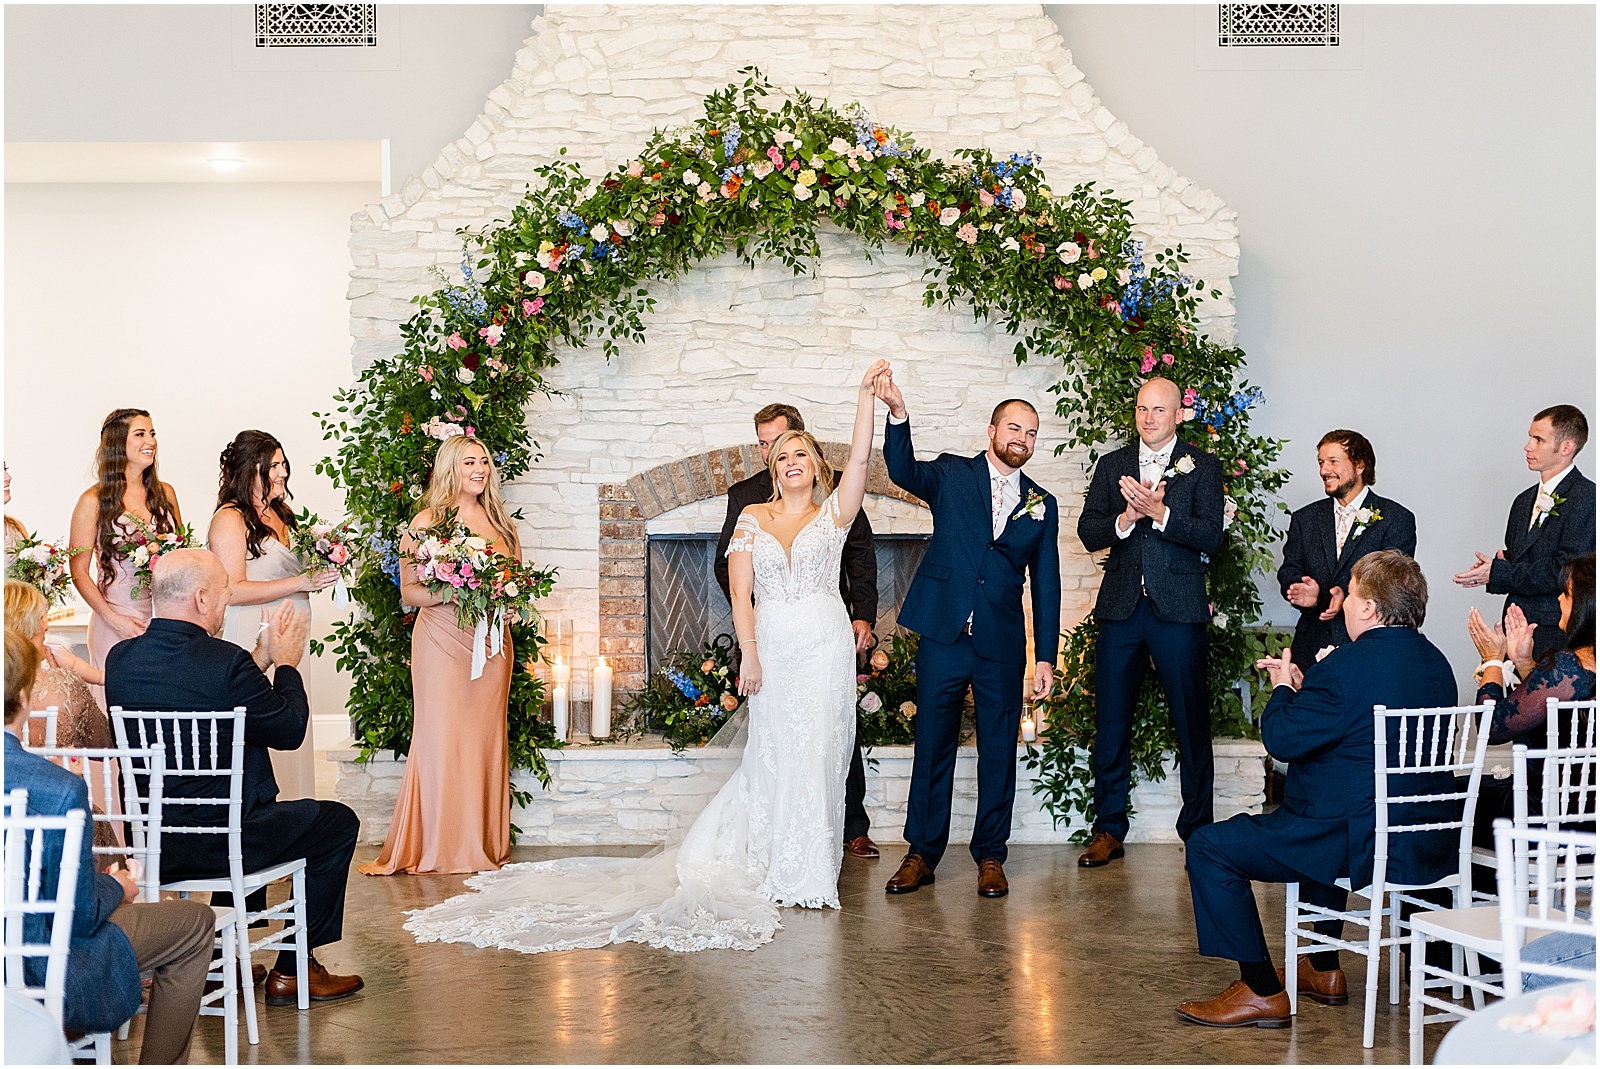 Mackenzie and Jourdan's Wedding at White Chateau | Bret and Brandie Photography0089.jpg